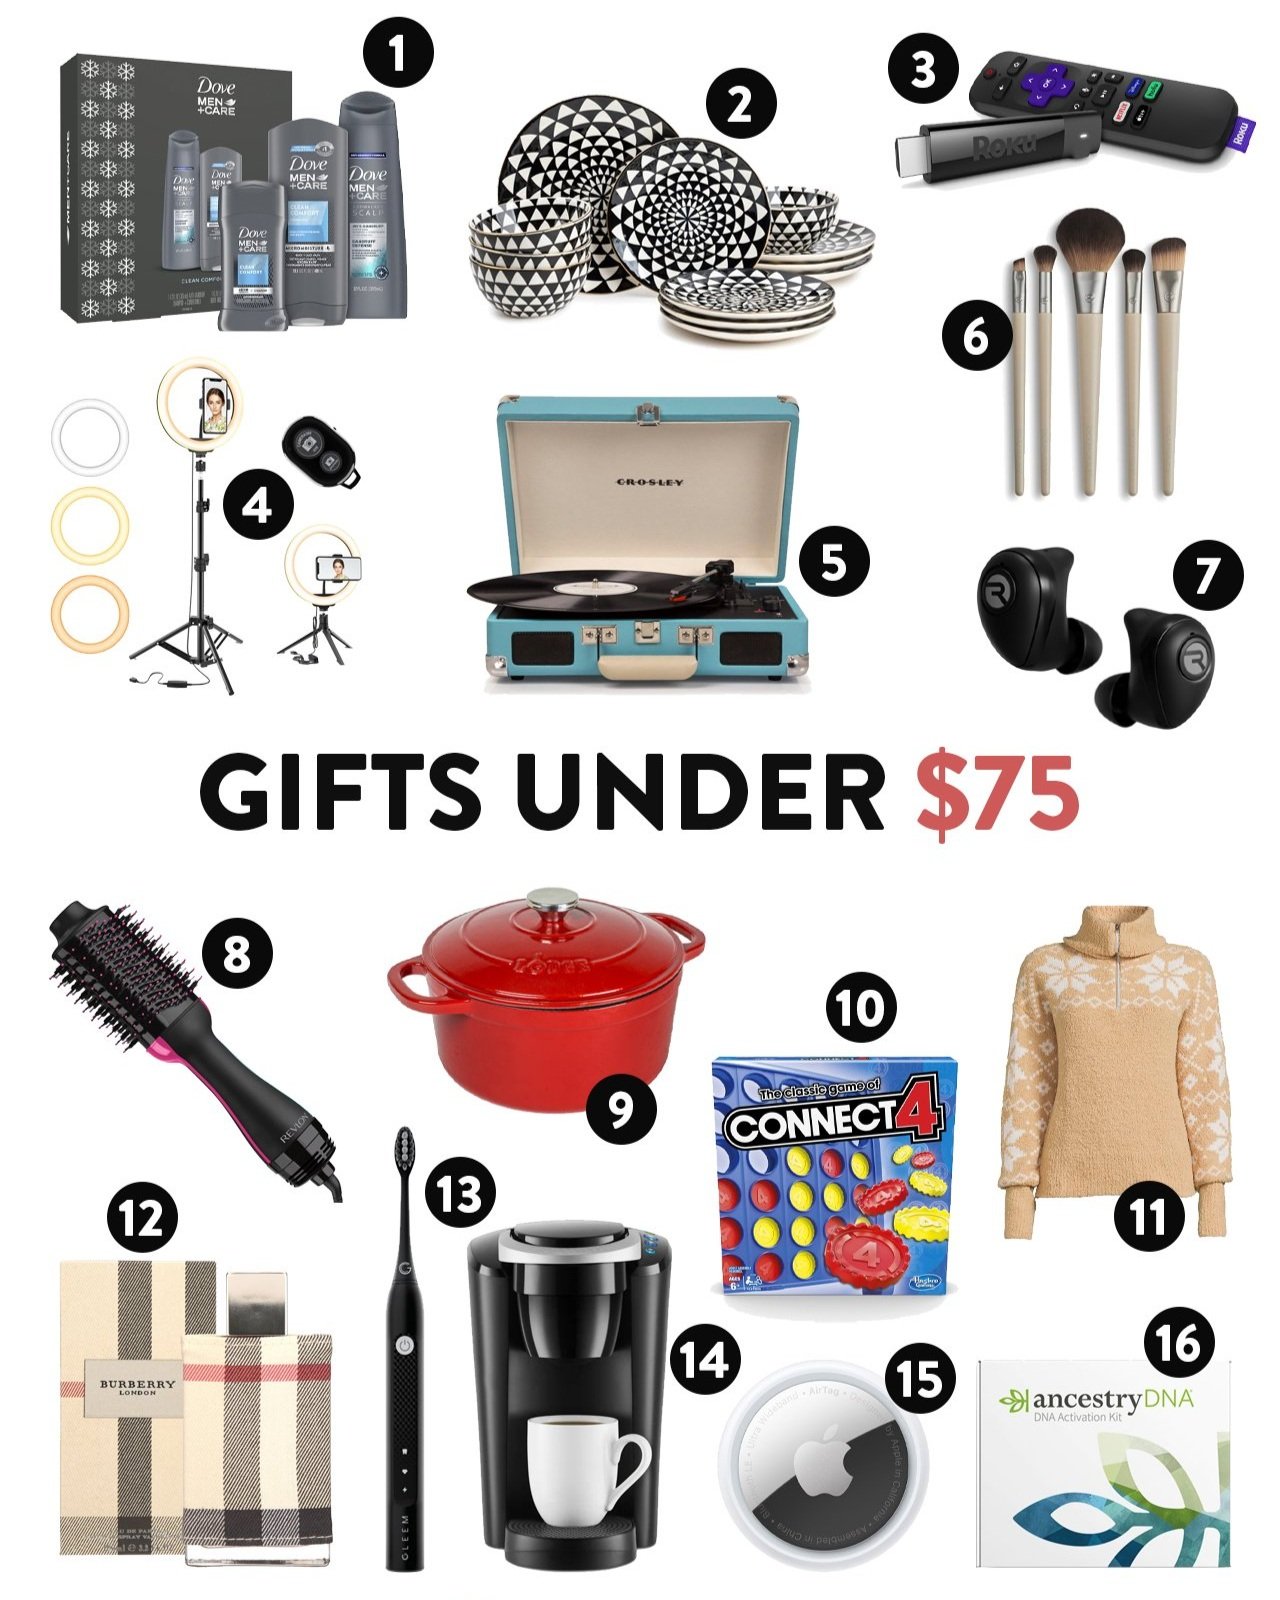 75+ Gift Ideas for Under $2 – Let's DIY It All – With Kritsyn Merkley